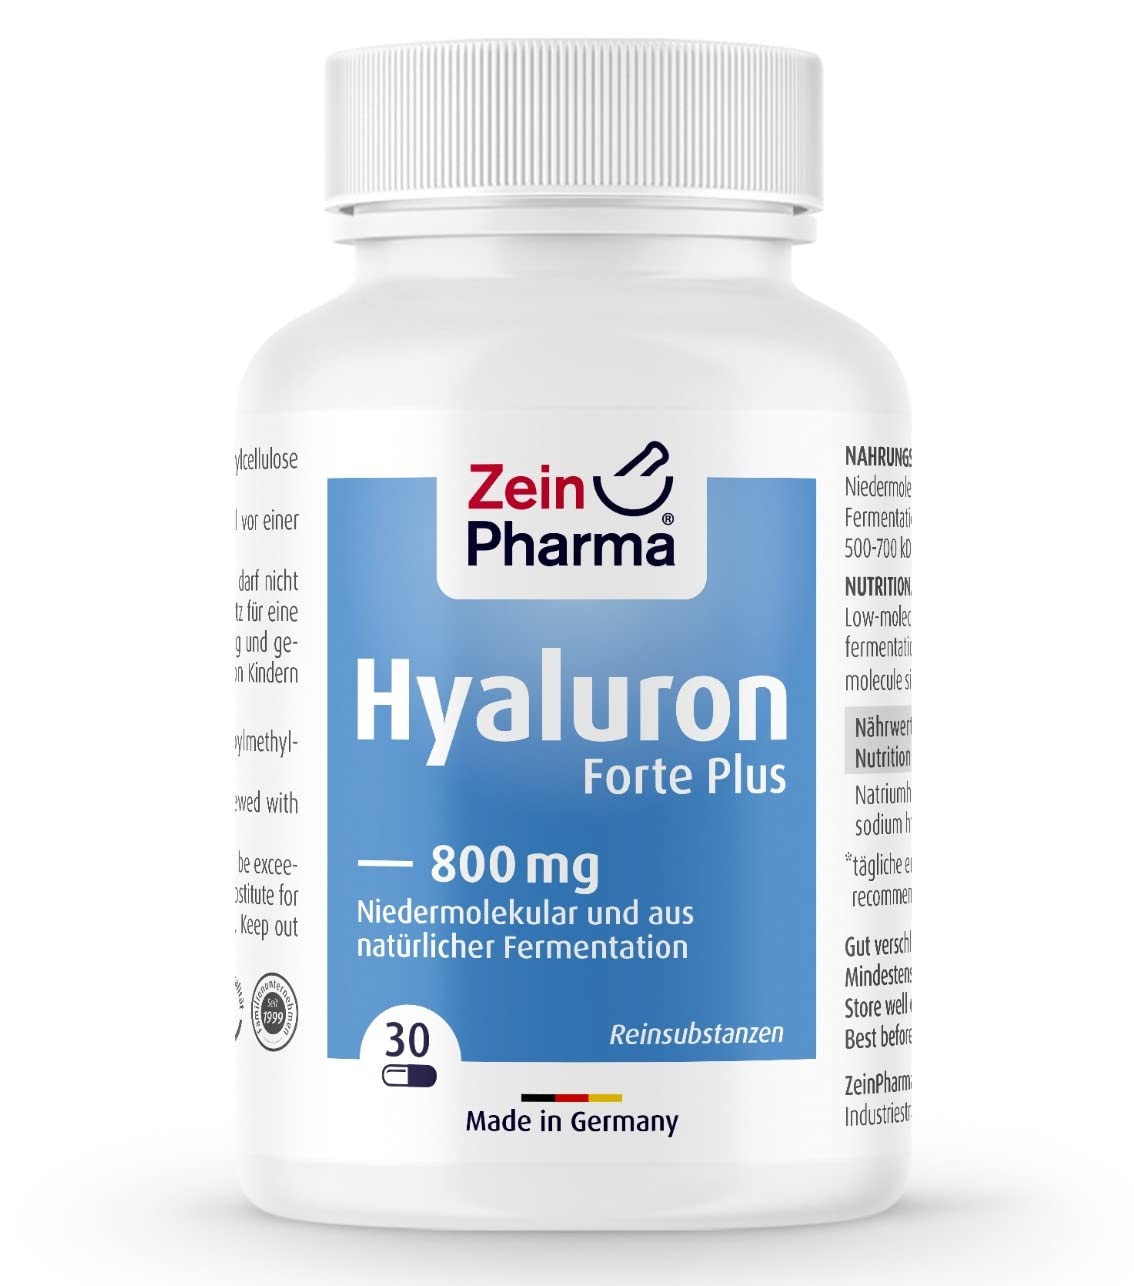 ZeinPharma Hyaluronsäure Forte Plus Kapseln 800 mg, 500-700 kDa - 30 vegane Kapseln aus natürlicher Fermentation